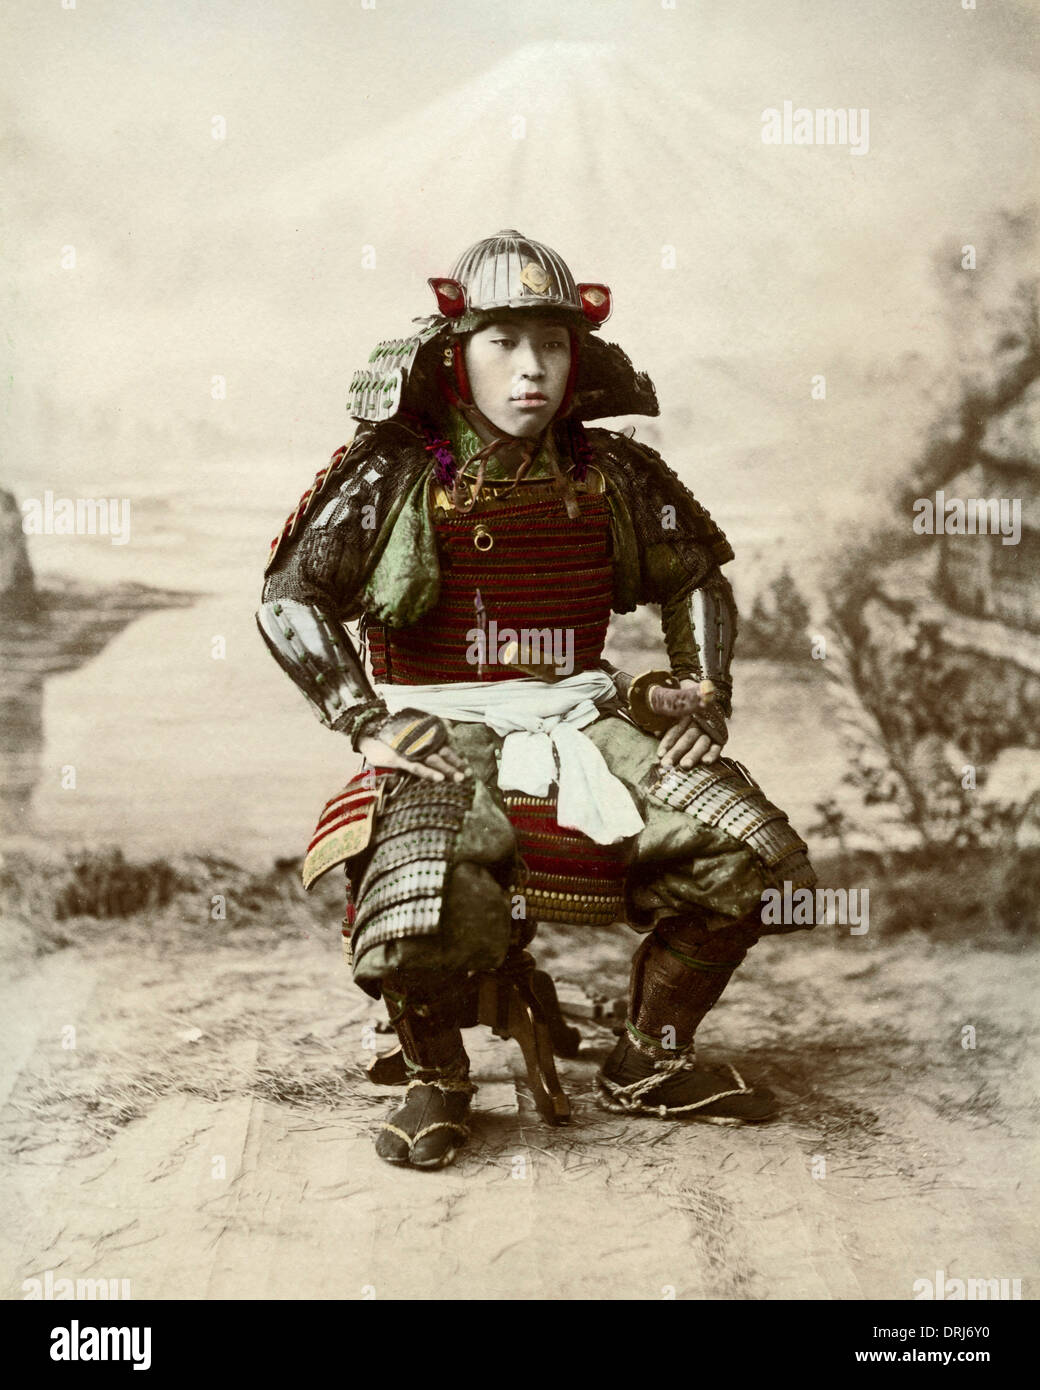 Samurai Warrior Japan Takeaki Enomoto Tokugawa Shogun 7x4 Inch Photo Reprint 